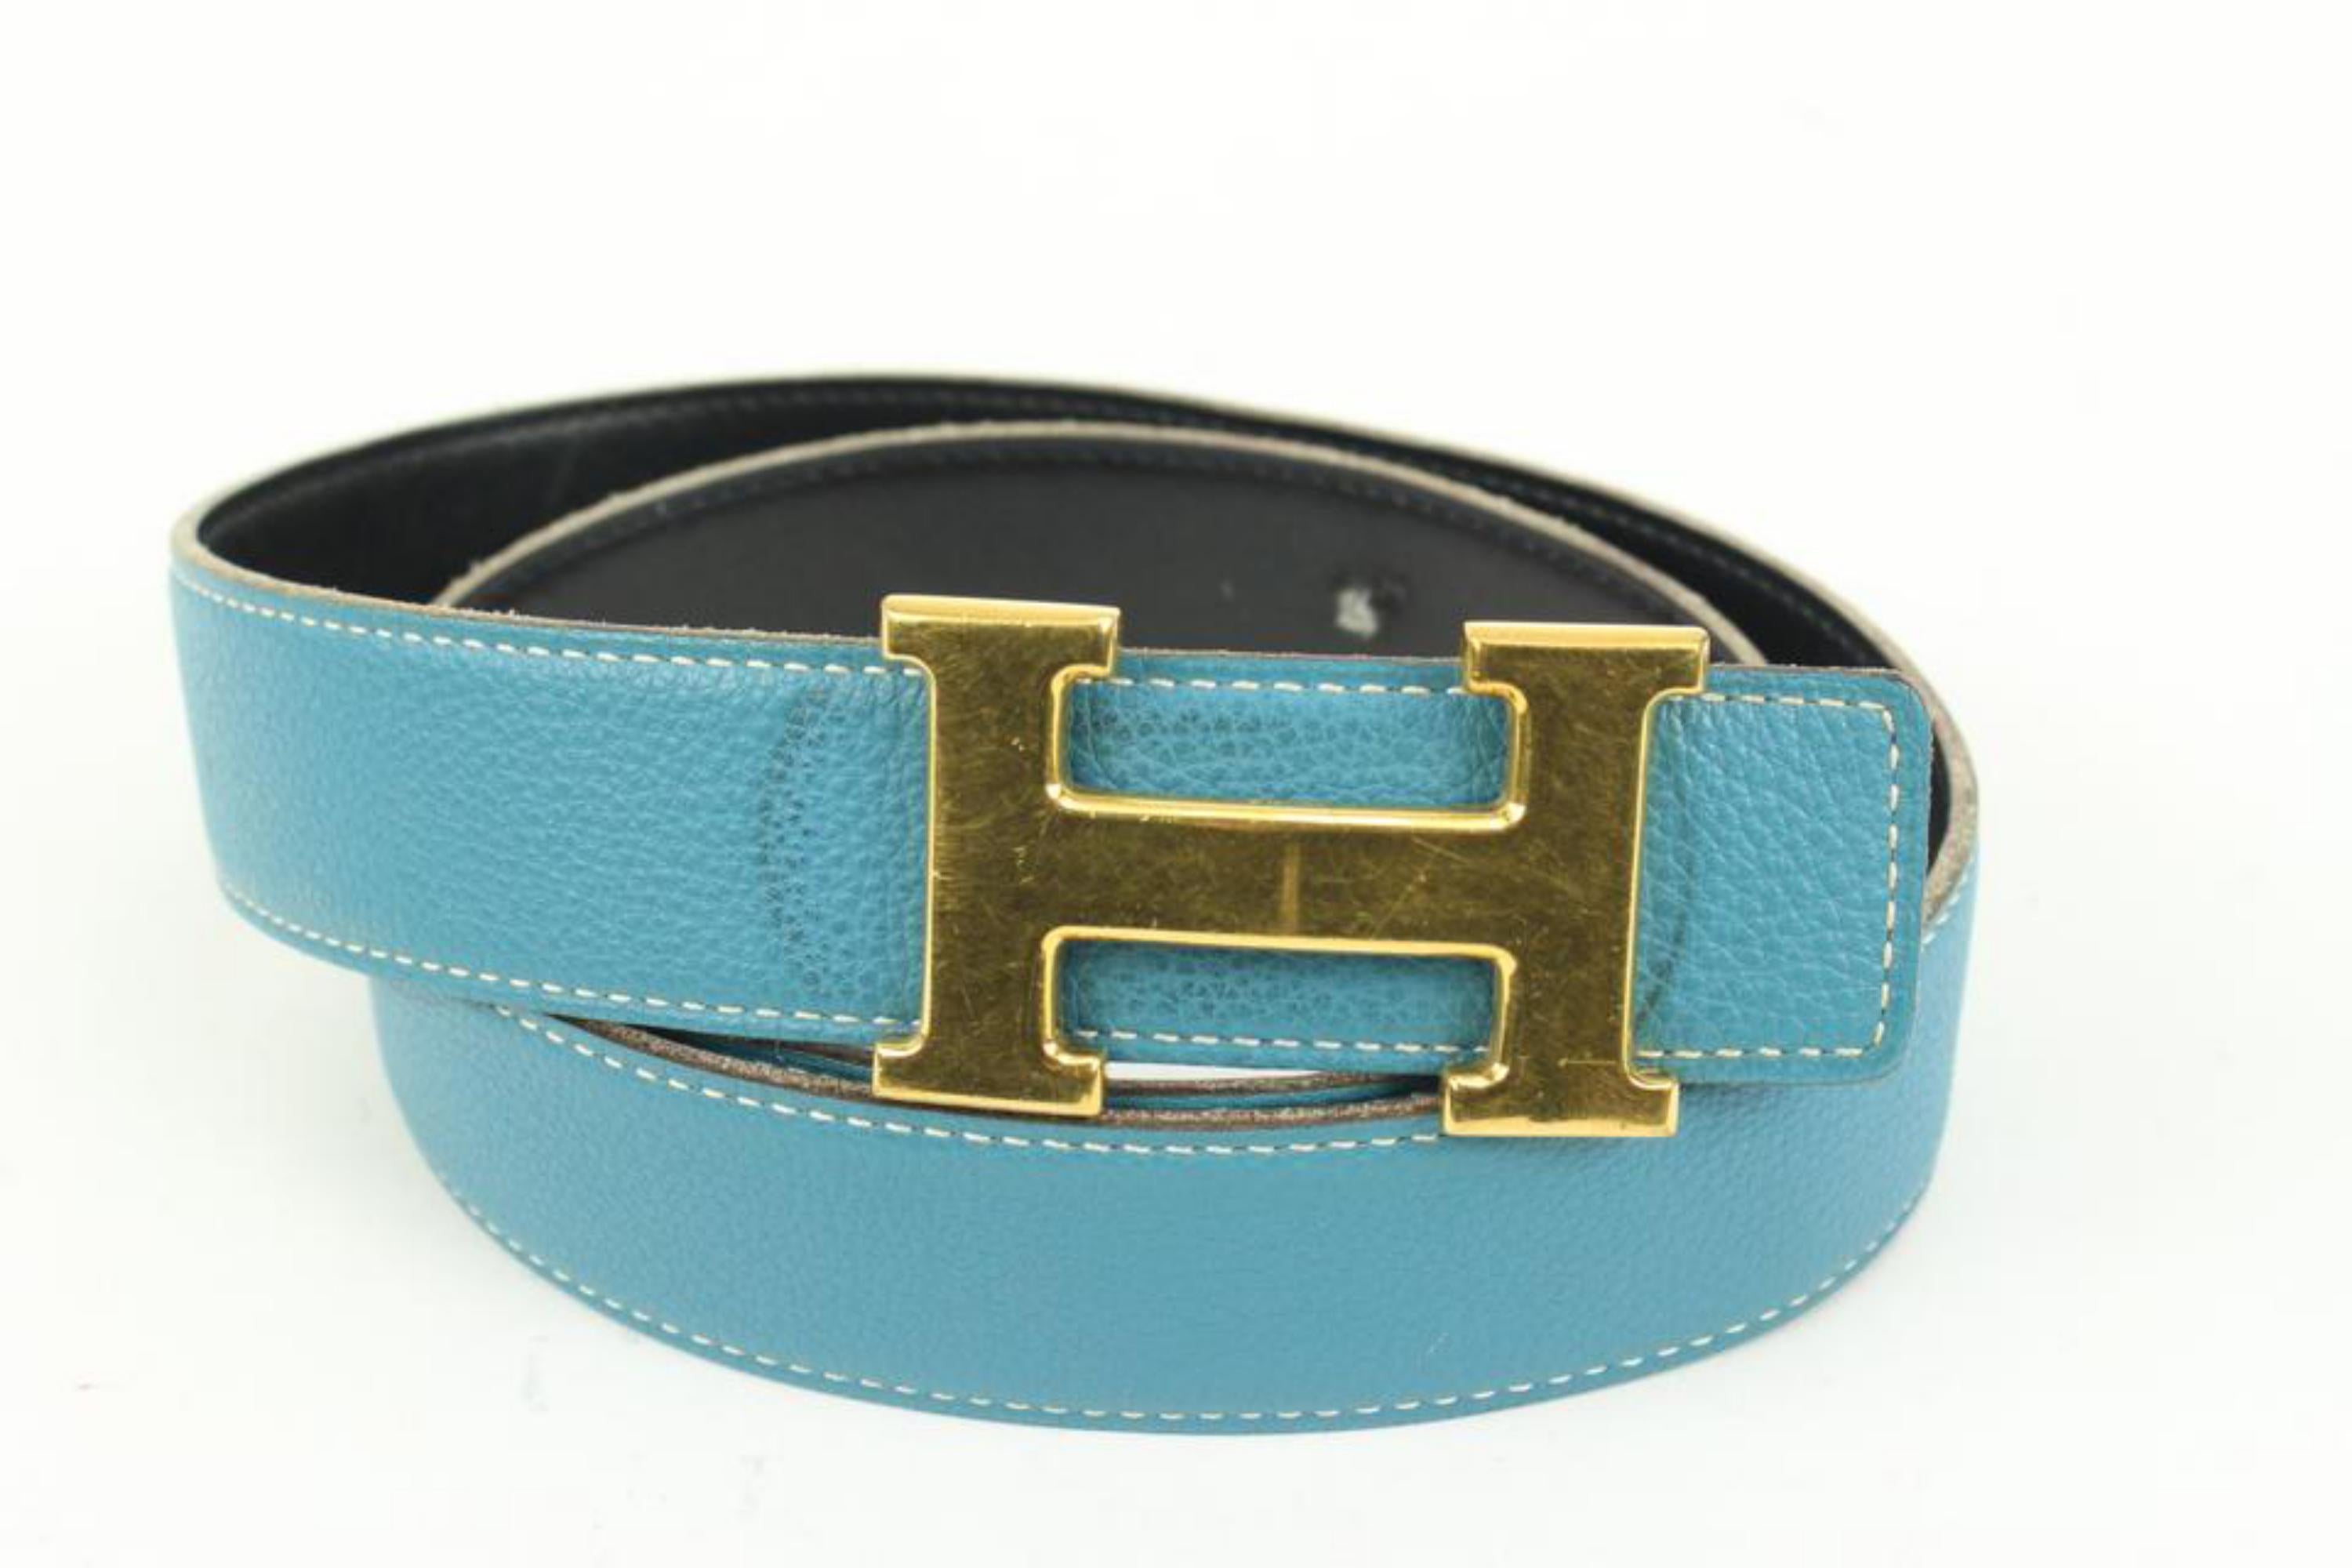 Kit ceinture logo H réversible 32 mm noir x bleu Jean x or 41h55 en vente